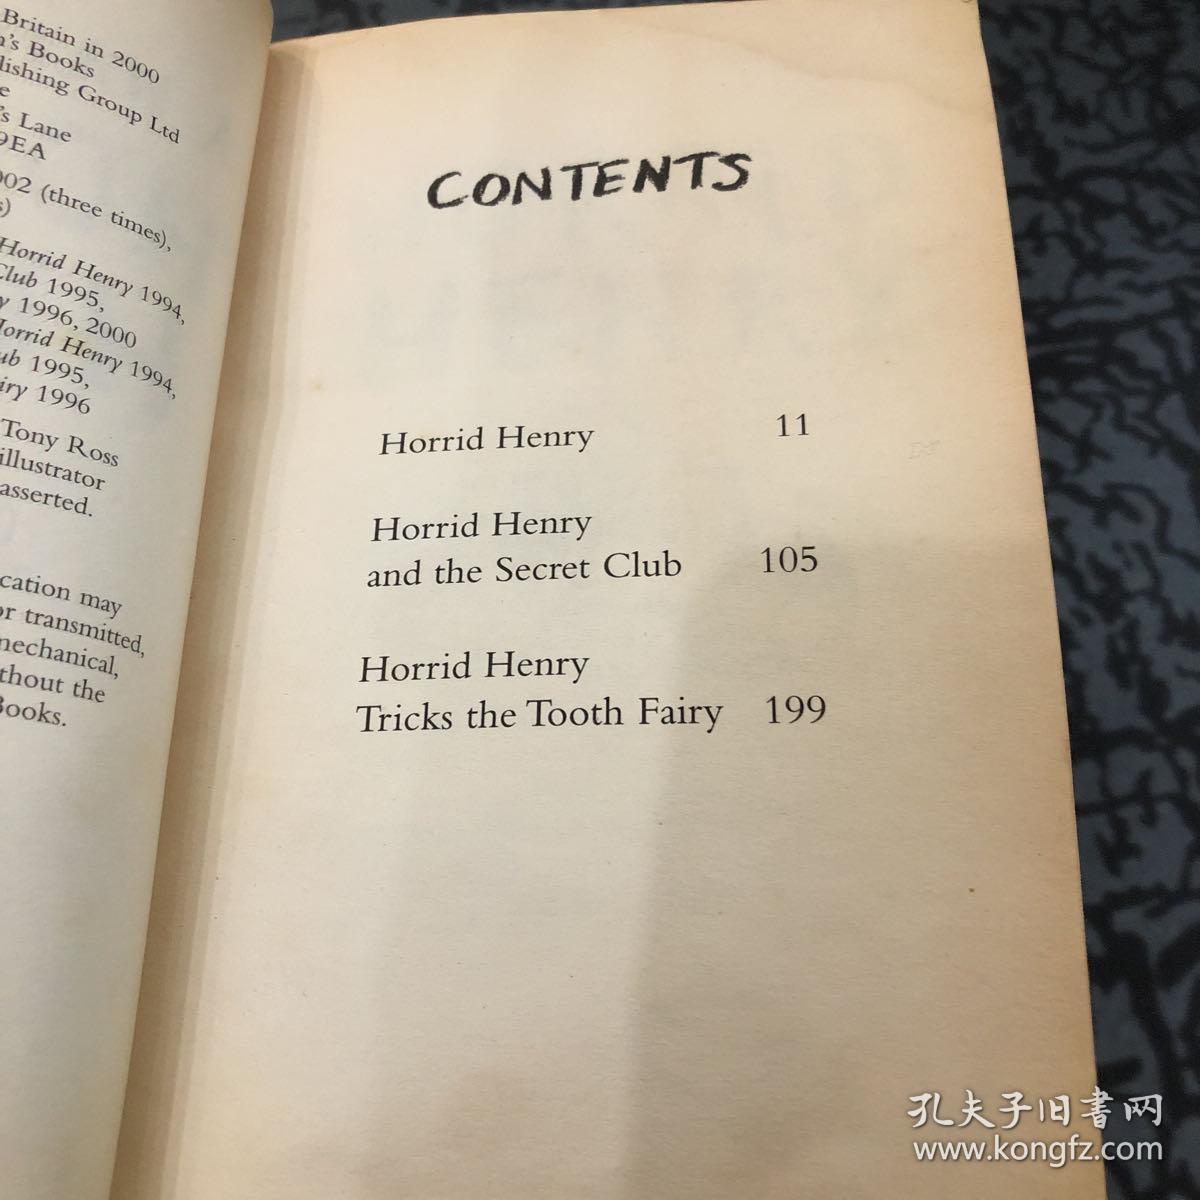 A Handful Of Horrid Henry :Horrid Henry, Horrid Henry and the Secret Club, Horrid Henry Tricks the Tooth Fairy 淘气包亨利三本合辑-淘气包亨利、秘密俱乐部、愚弄牙仙子